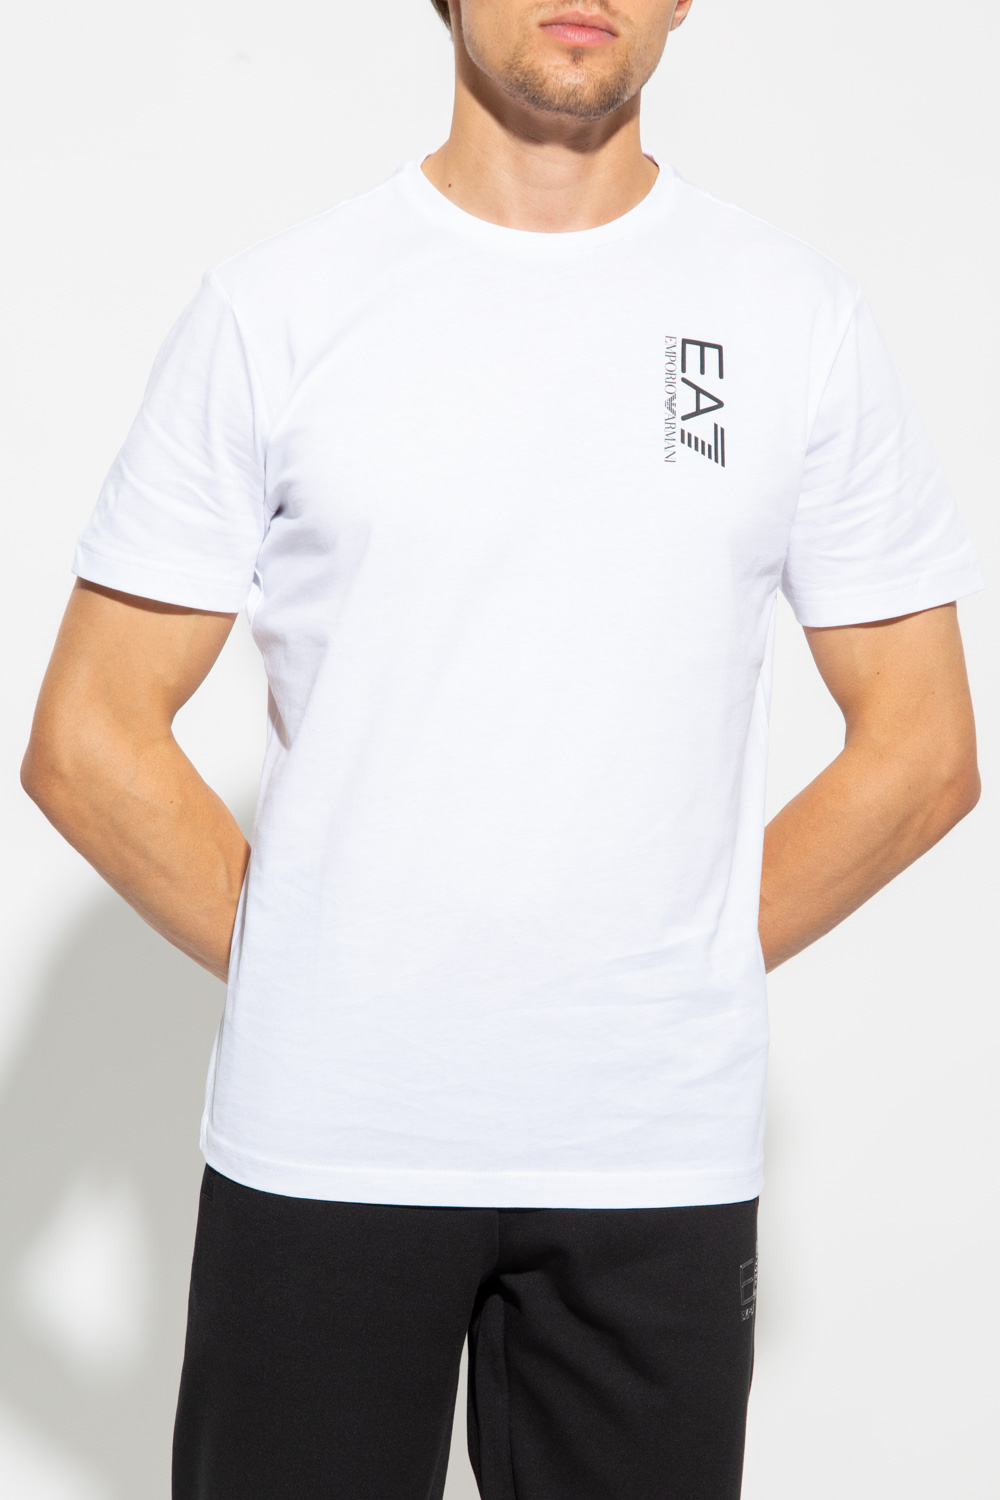 Mens EMPORIO ARMANI Chest GA Short Sleeve T-shirt Blue 8N1T99-1JNQZ-0944 T-shirt with logo